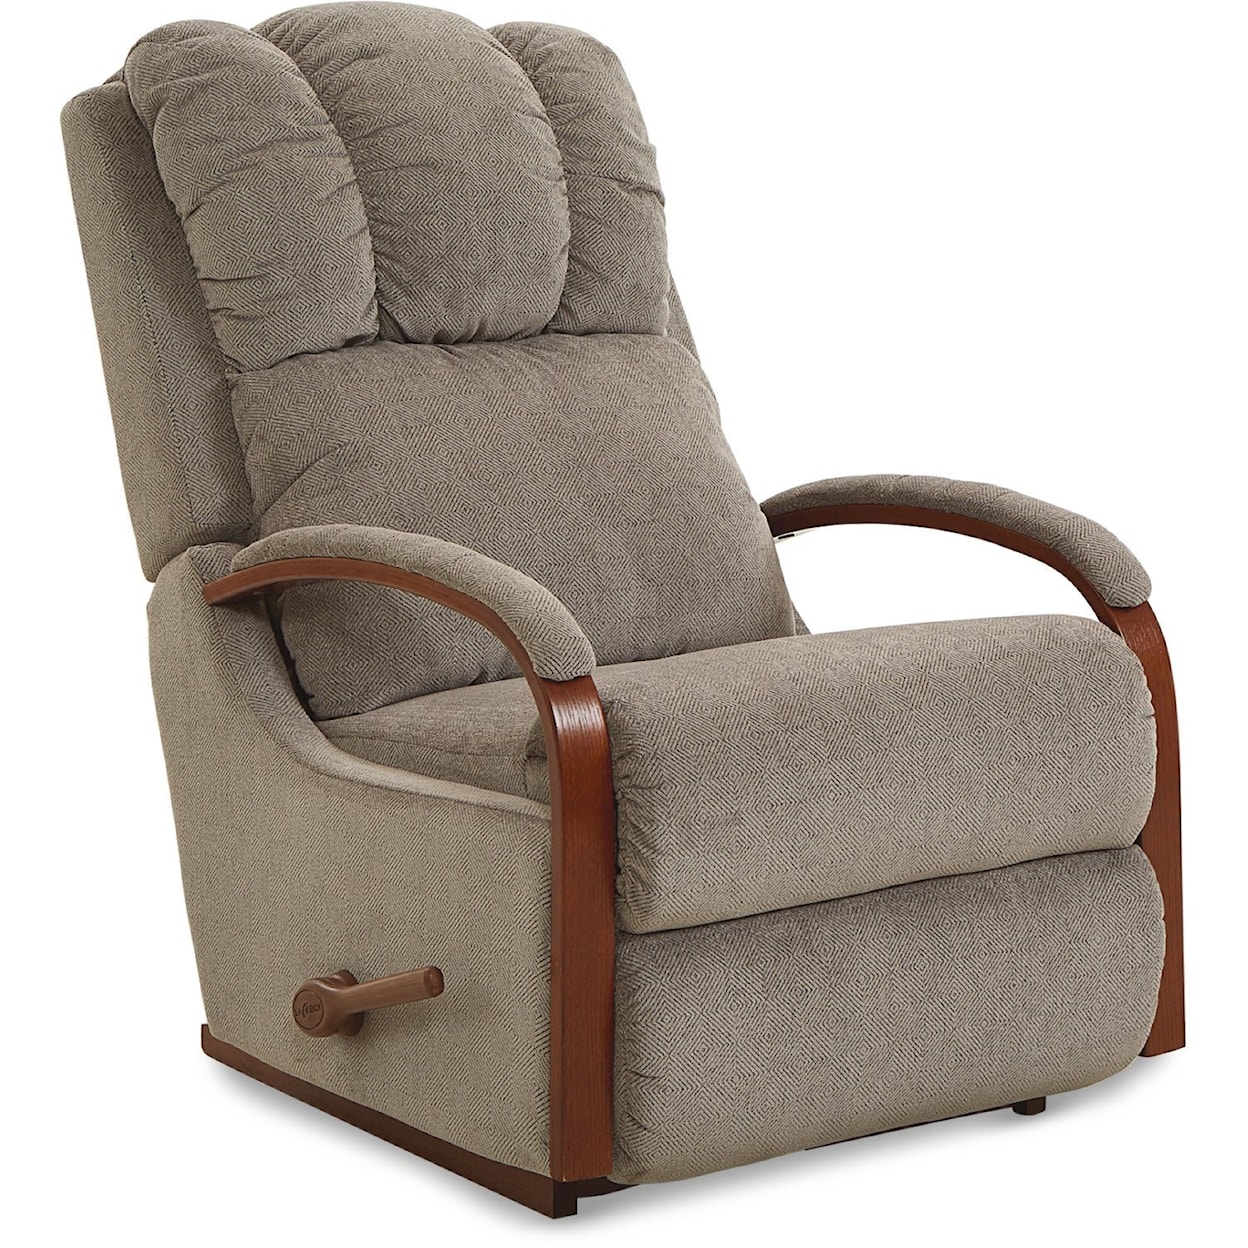 La-Z-Boy Harbor Town 010799 D180786 Reclina-Rocker® Reclining Chair, Factory Direct Furniture